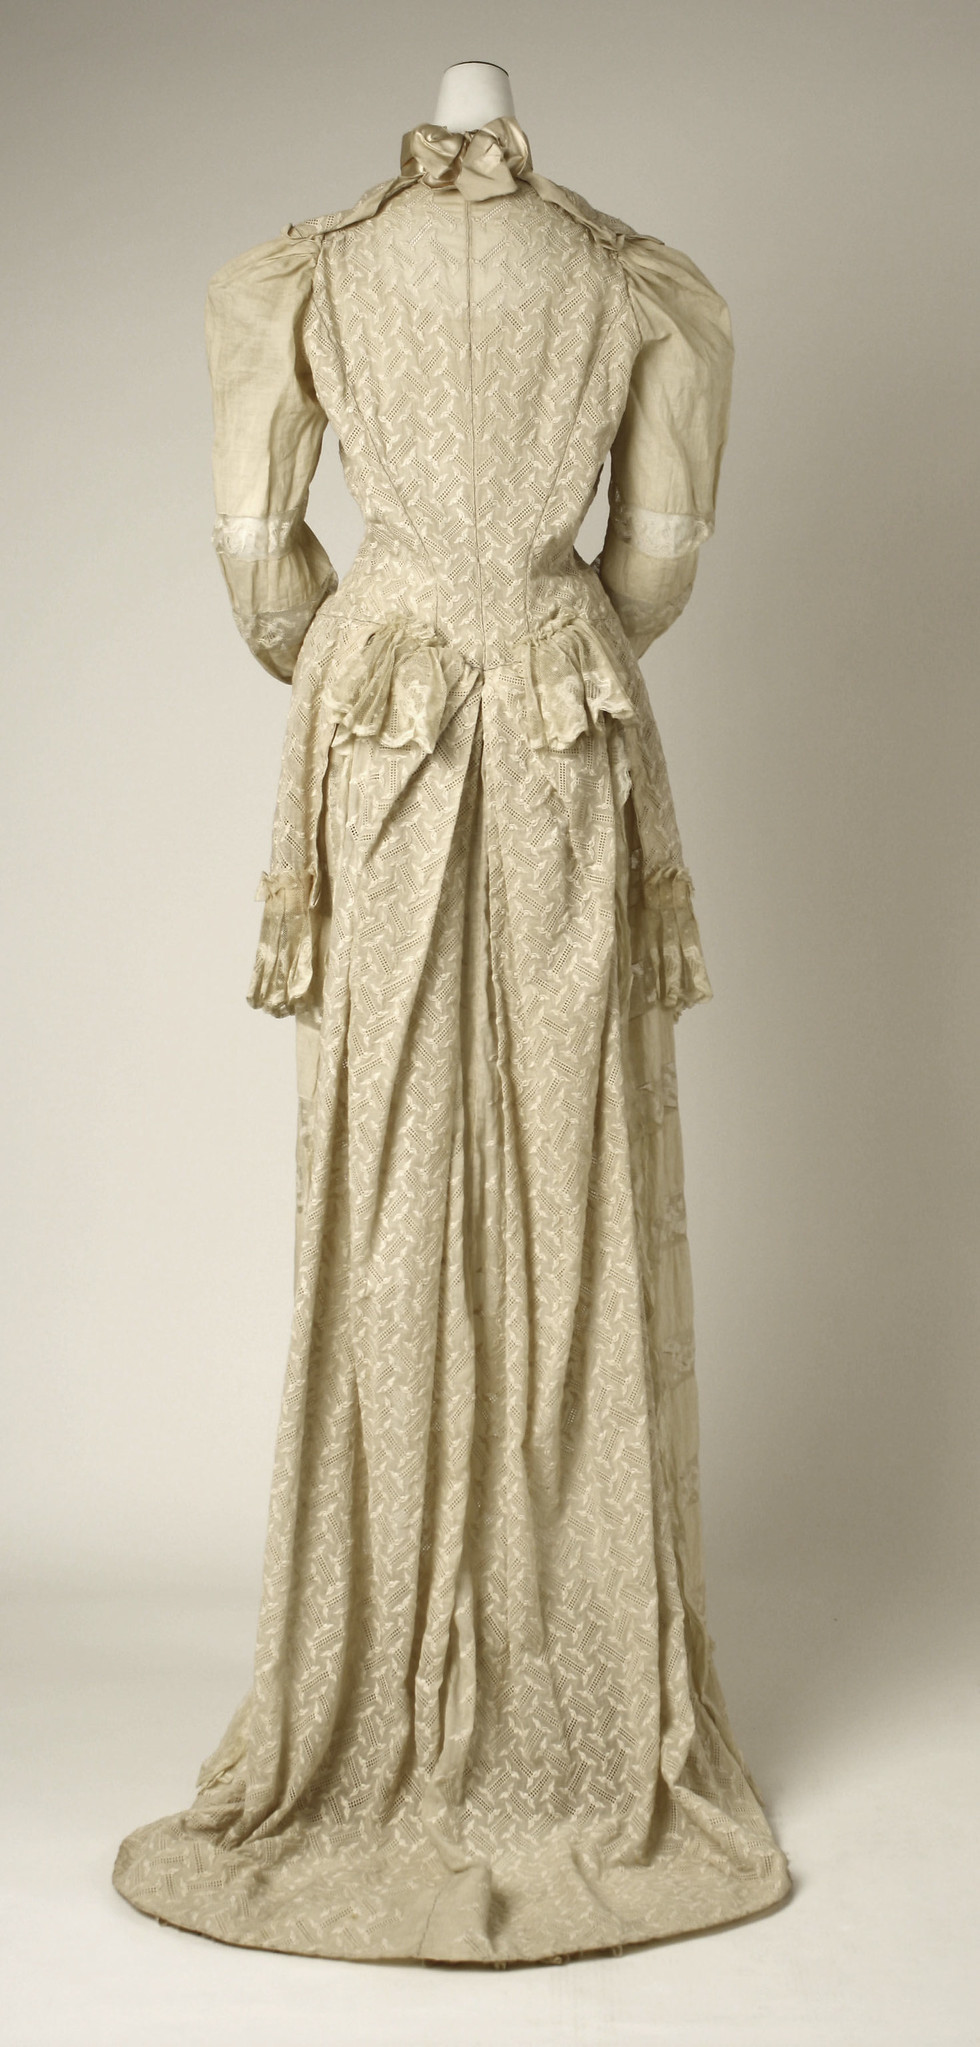 c1891. American. Cotton. metmuseum